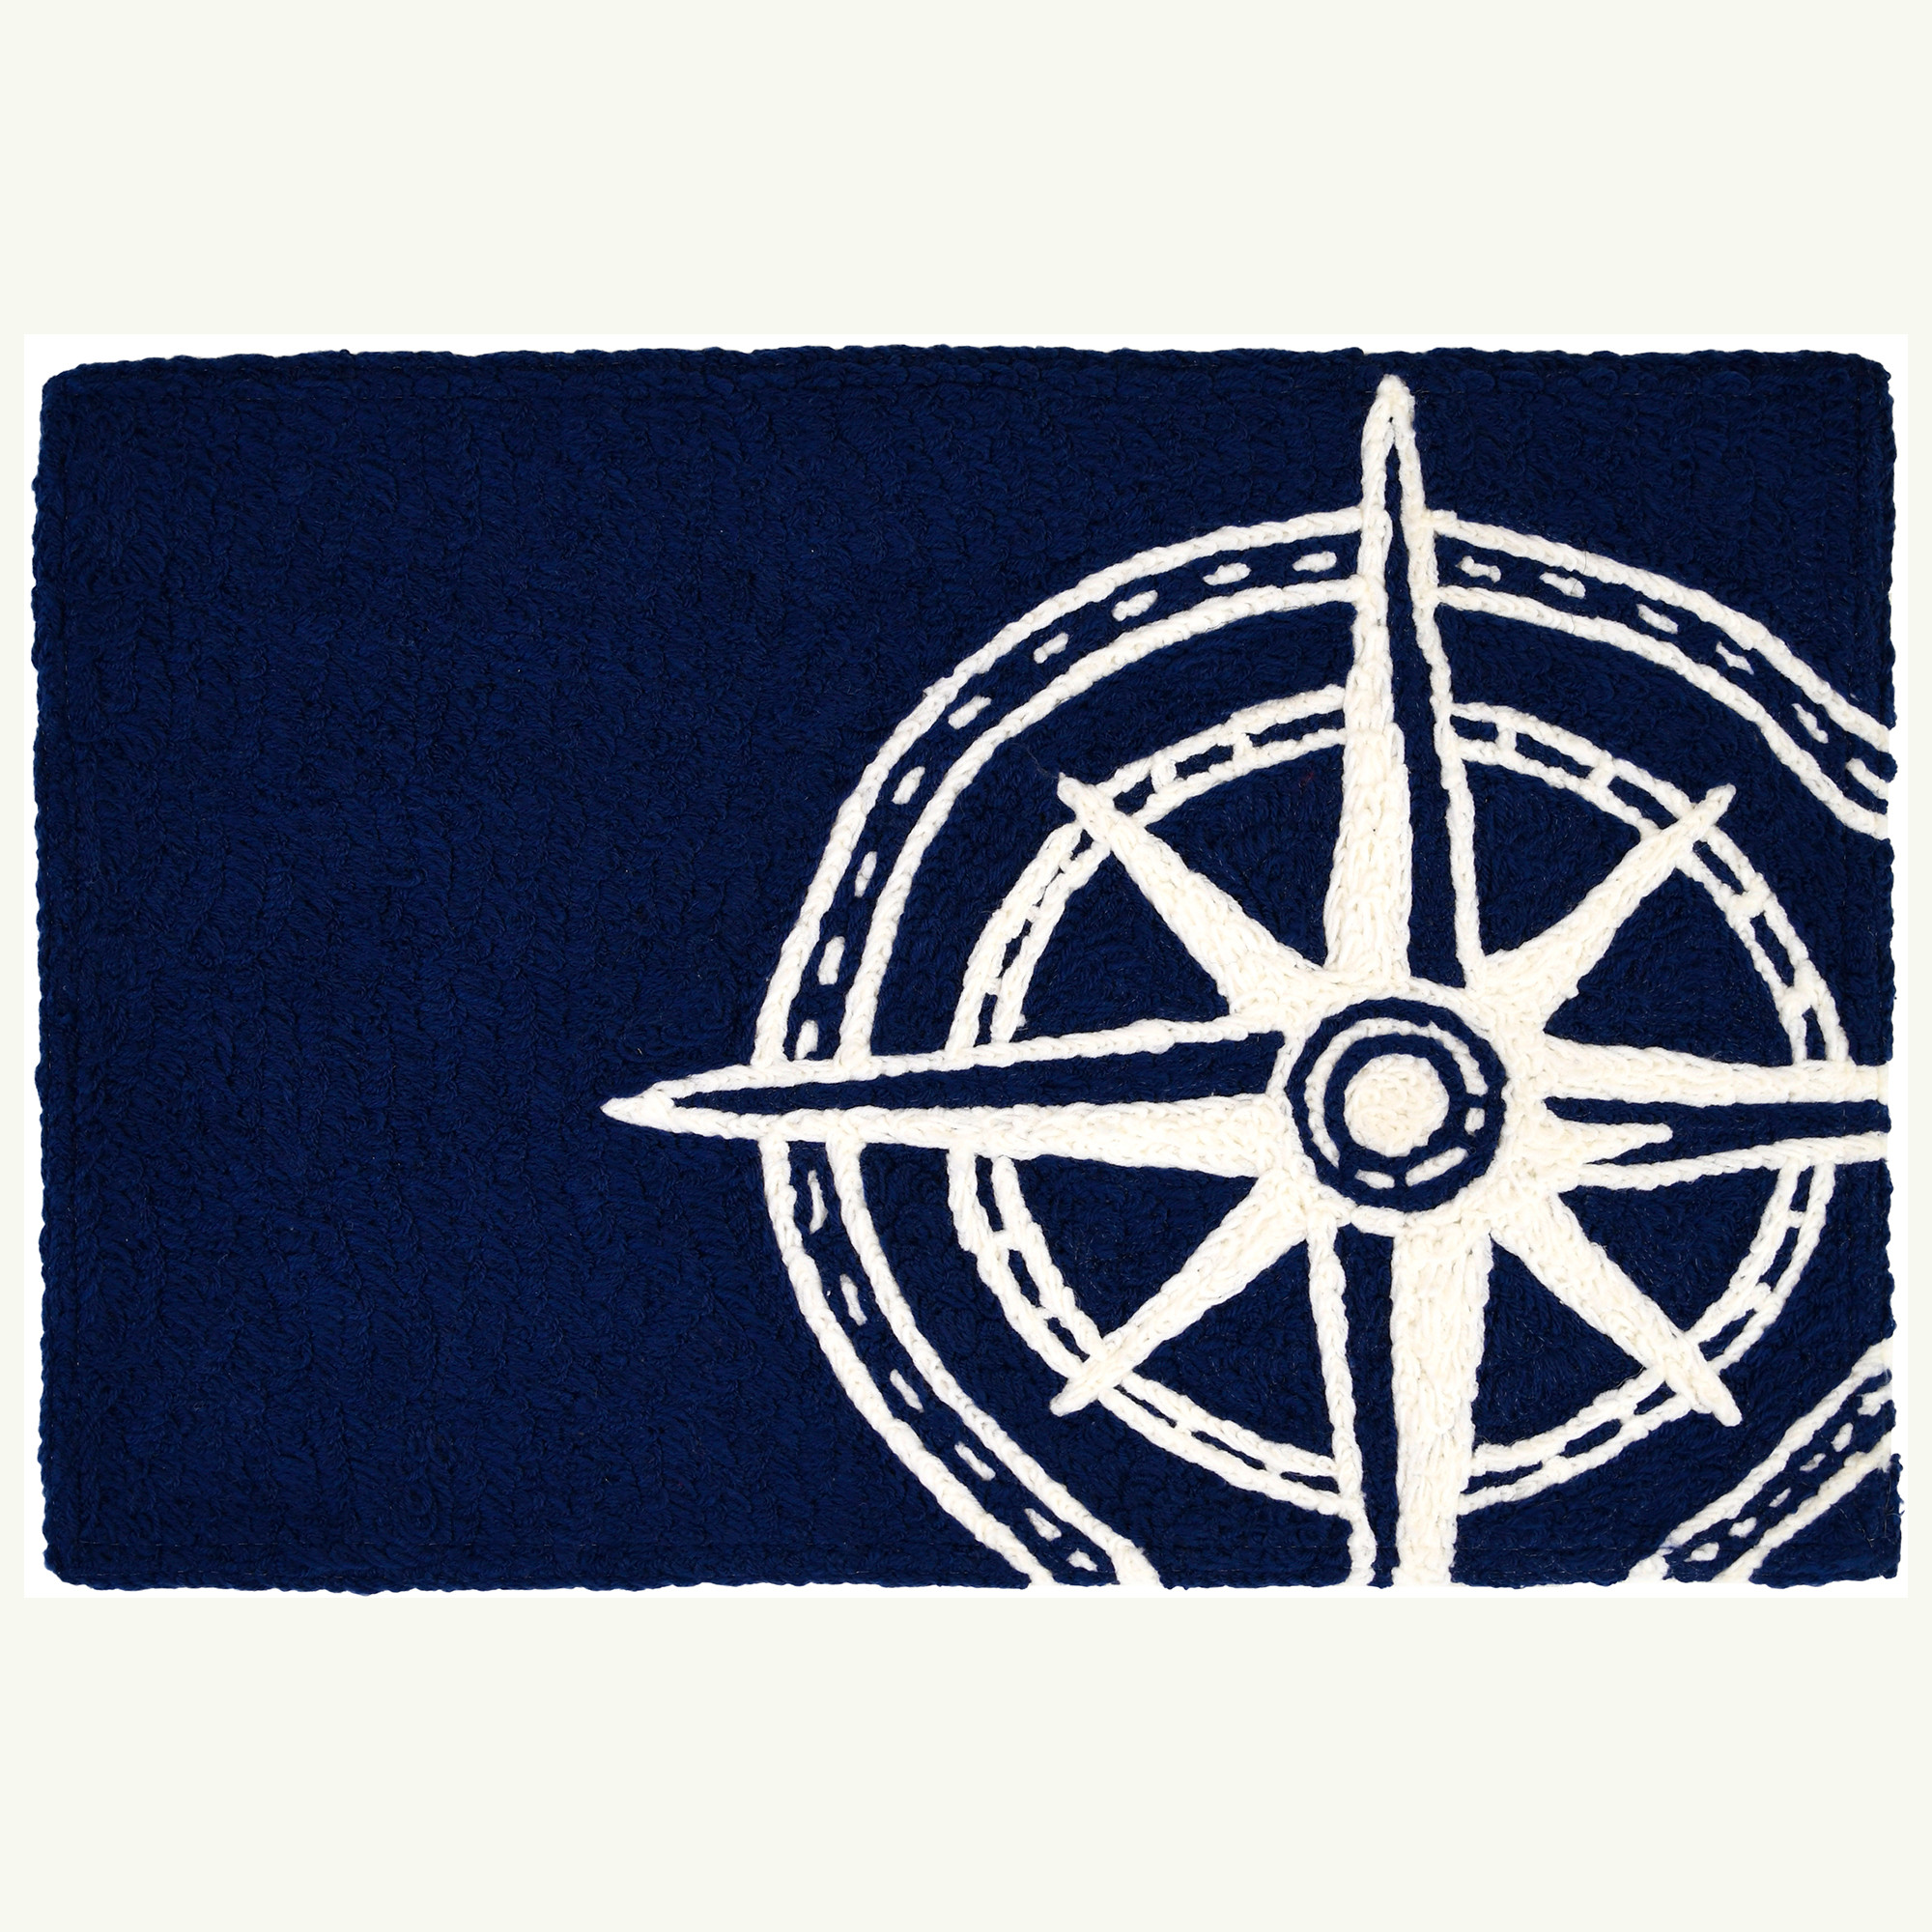 Navy Compass